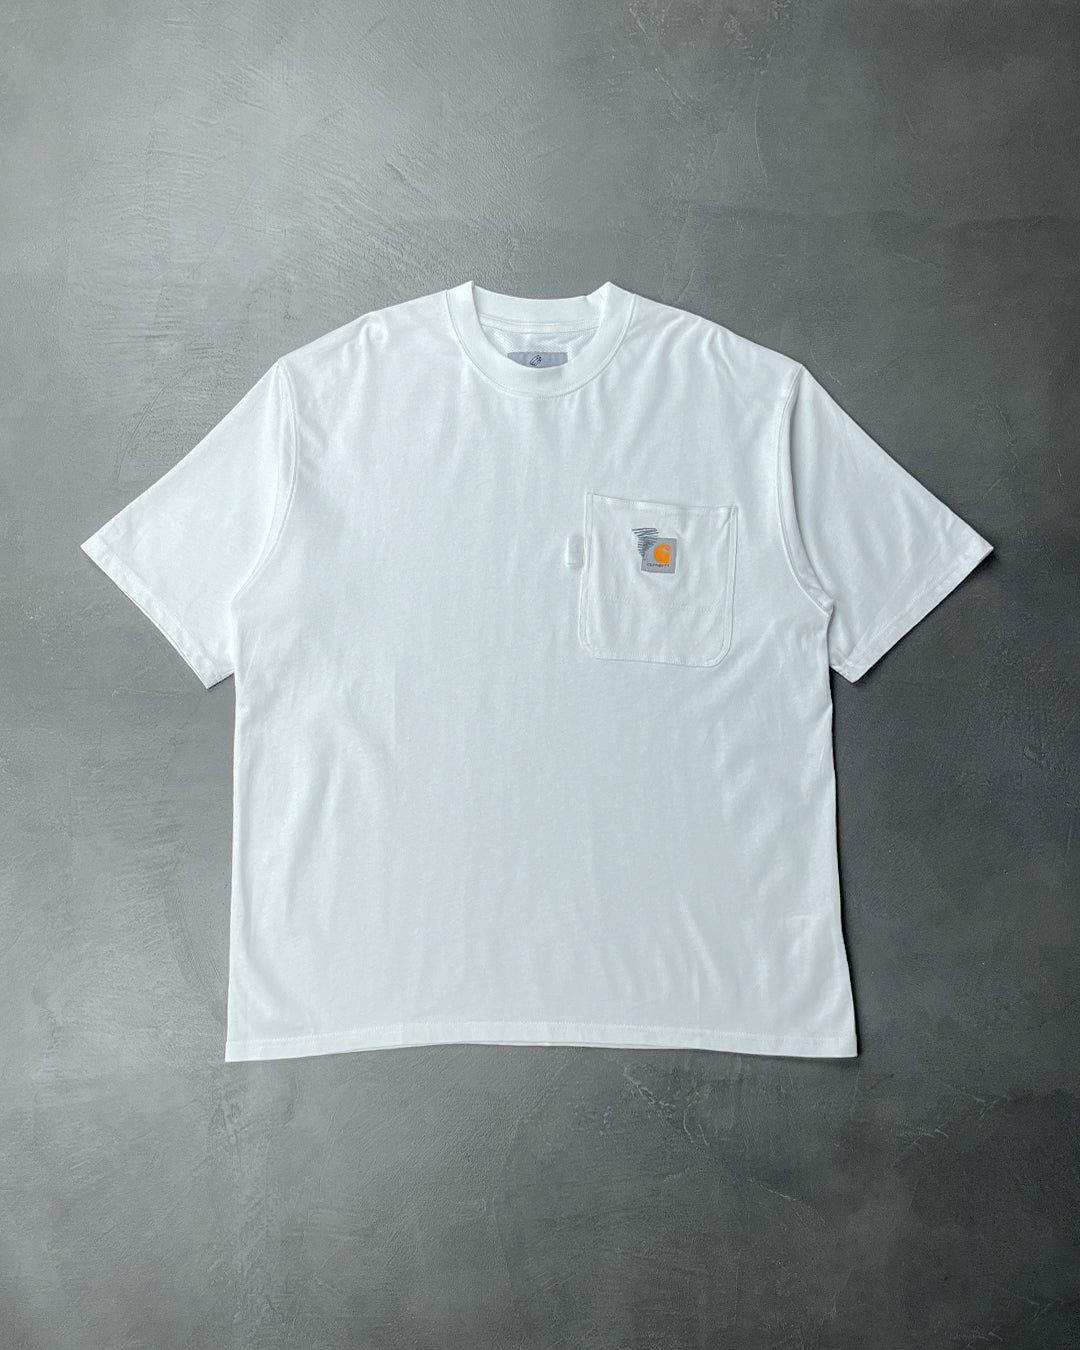 Carhartt WIP x Invincible S/S 15 Pocket T-Shirt White - UNIFORM